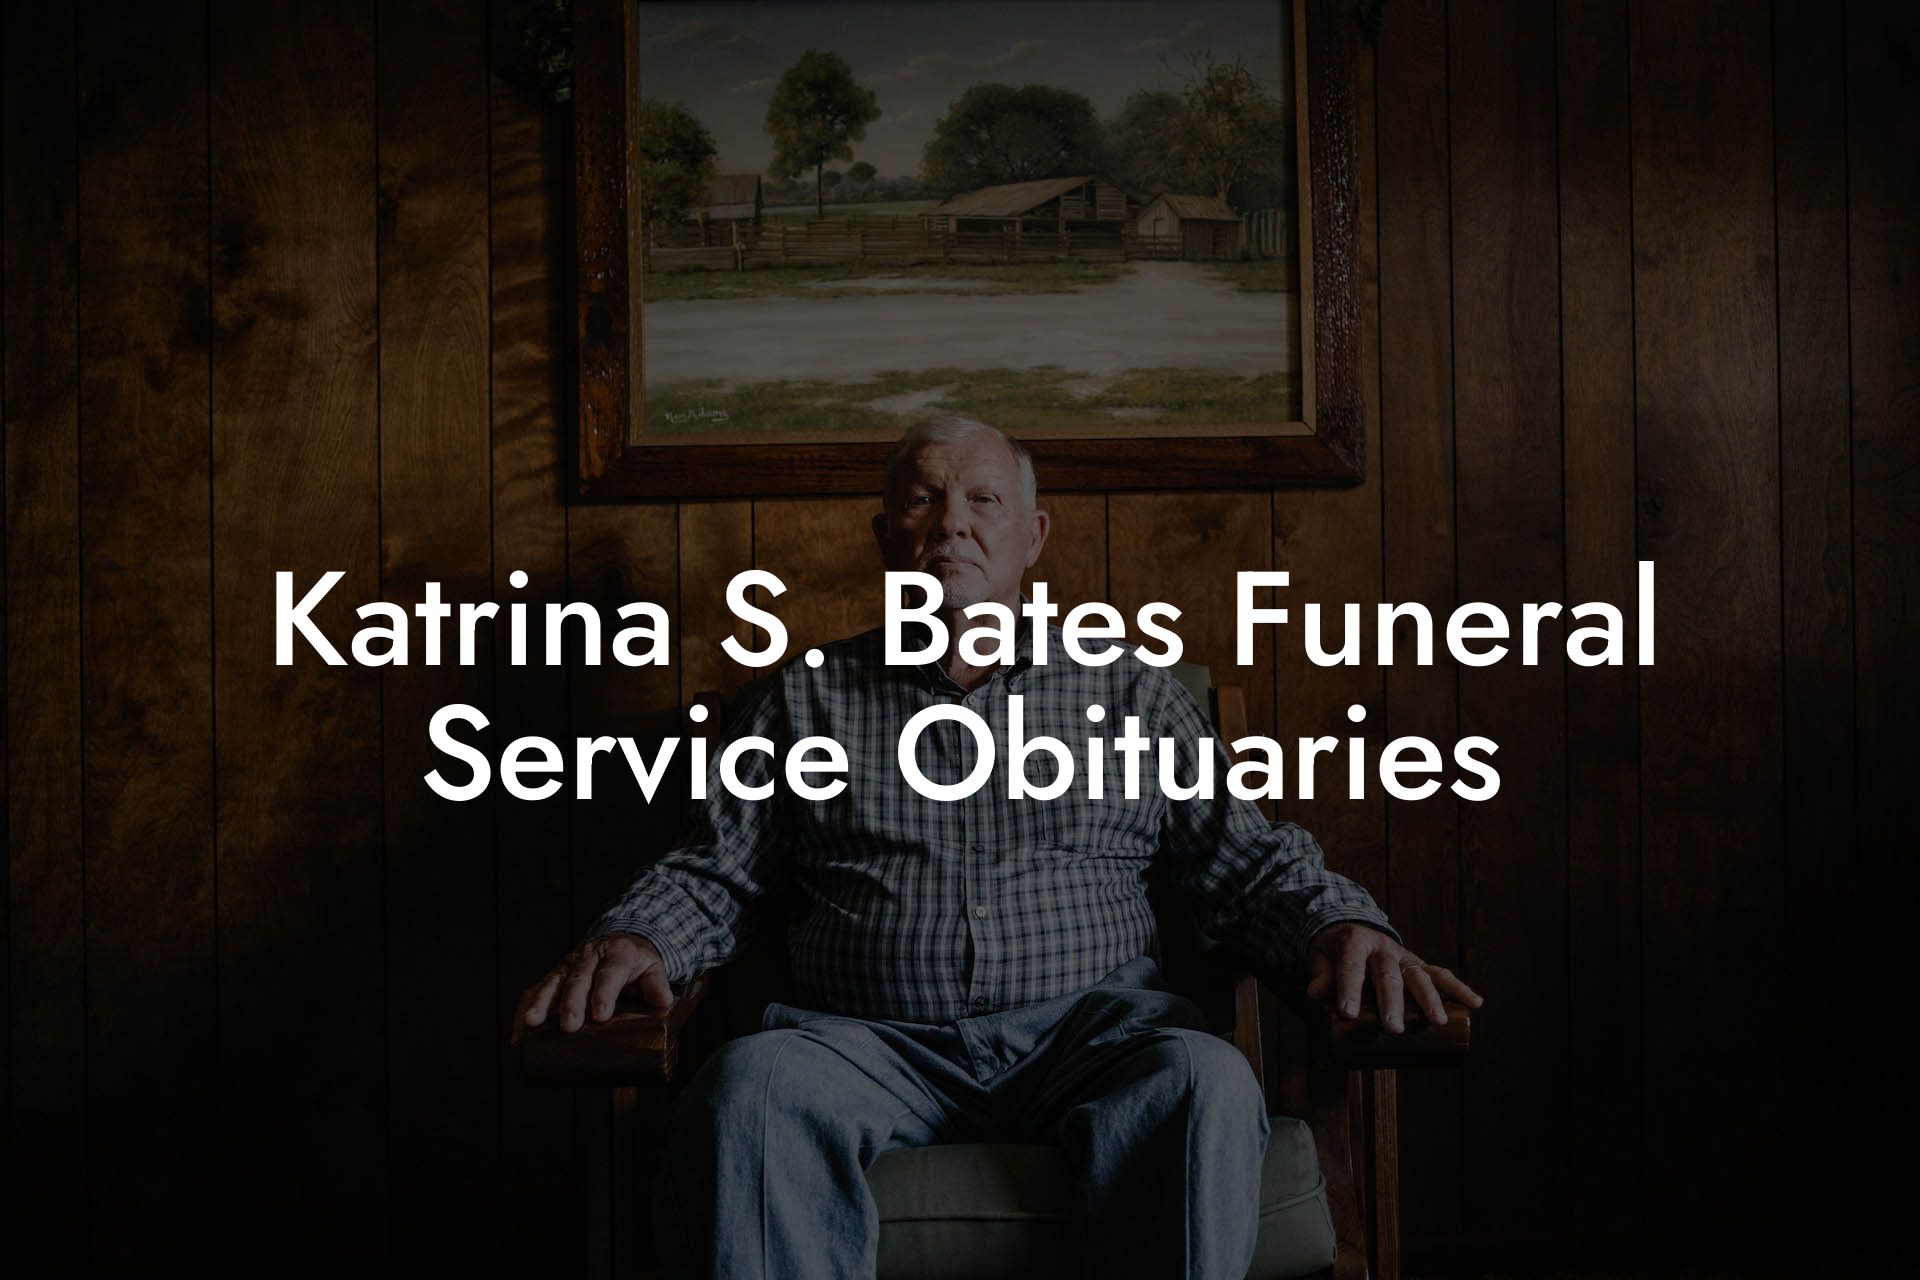 Katrina S. Bates Funeral Service Obituaries